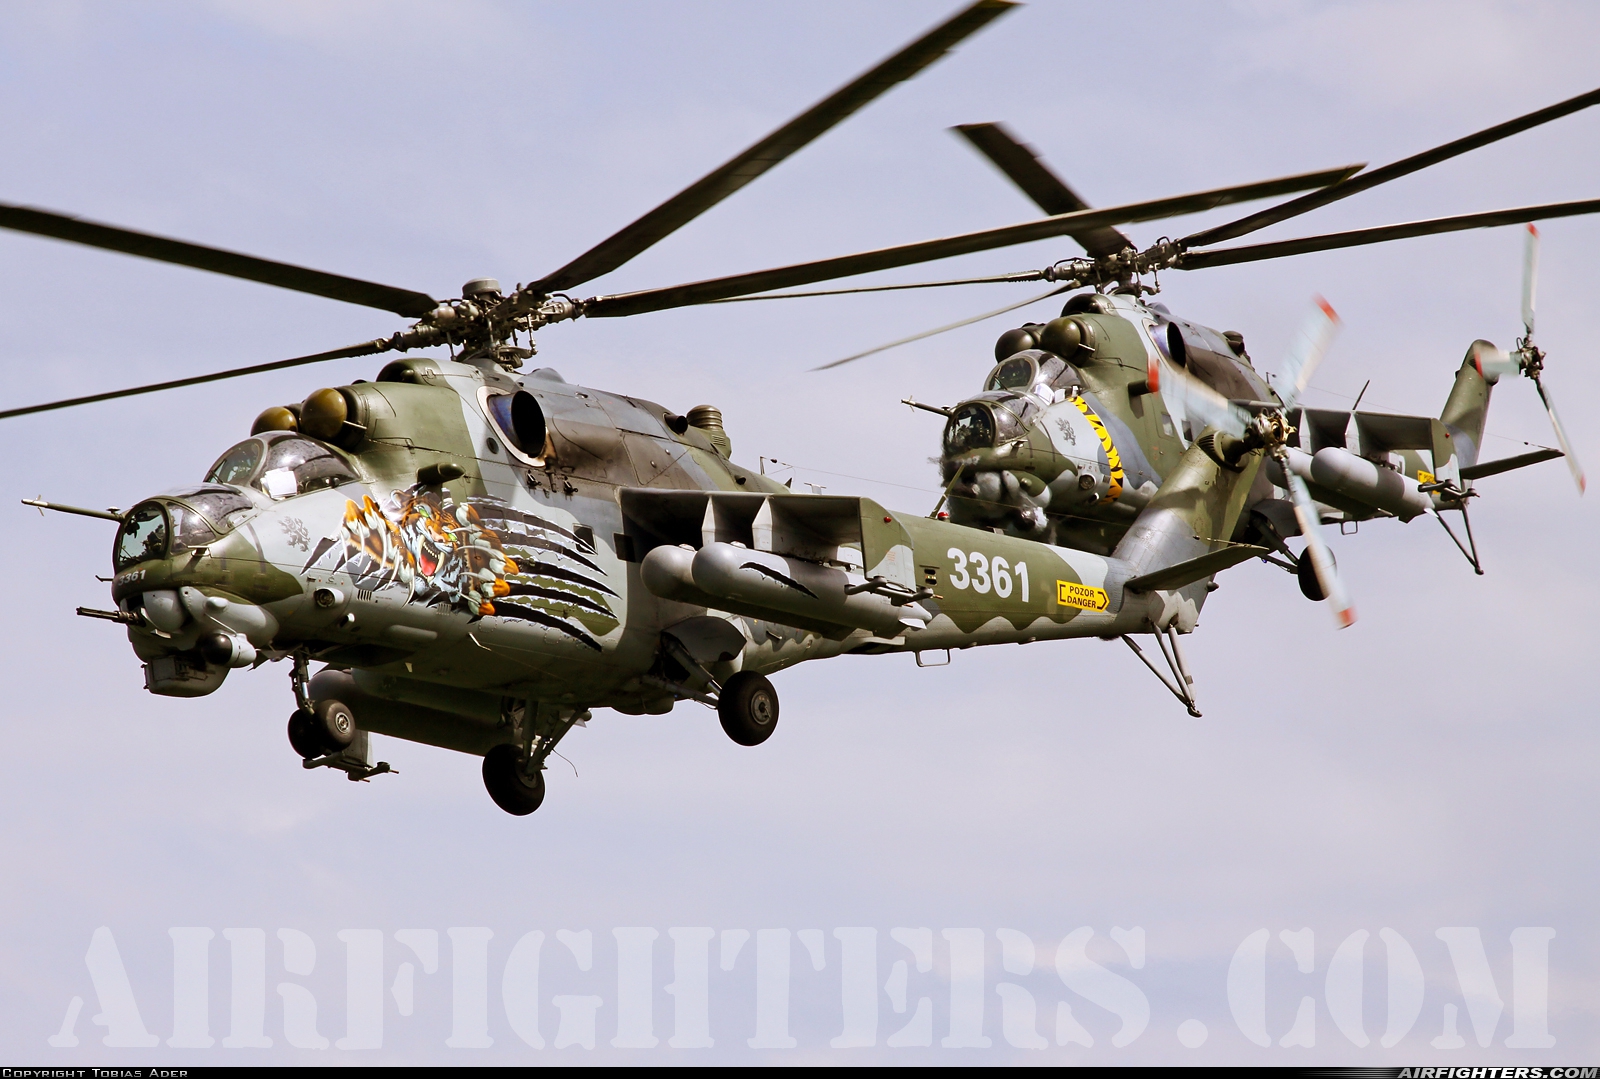 Czech Republic - Air Force Mil Mi-35 (Mi-24V) 3361 at Cambrai - Epinoy (LFQI), France